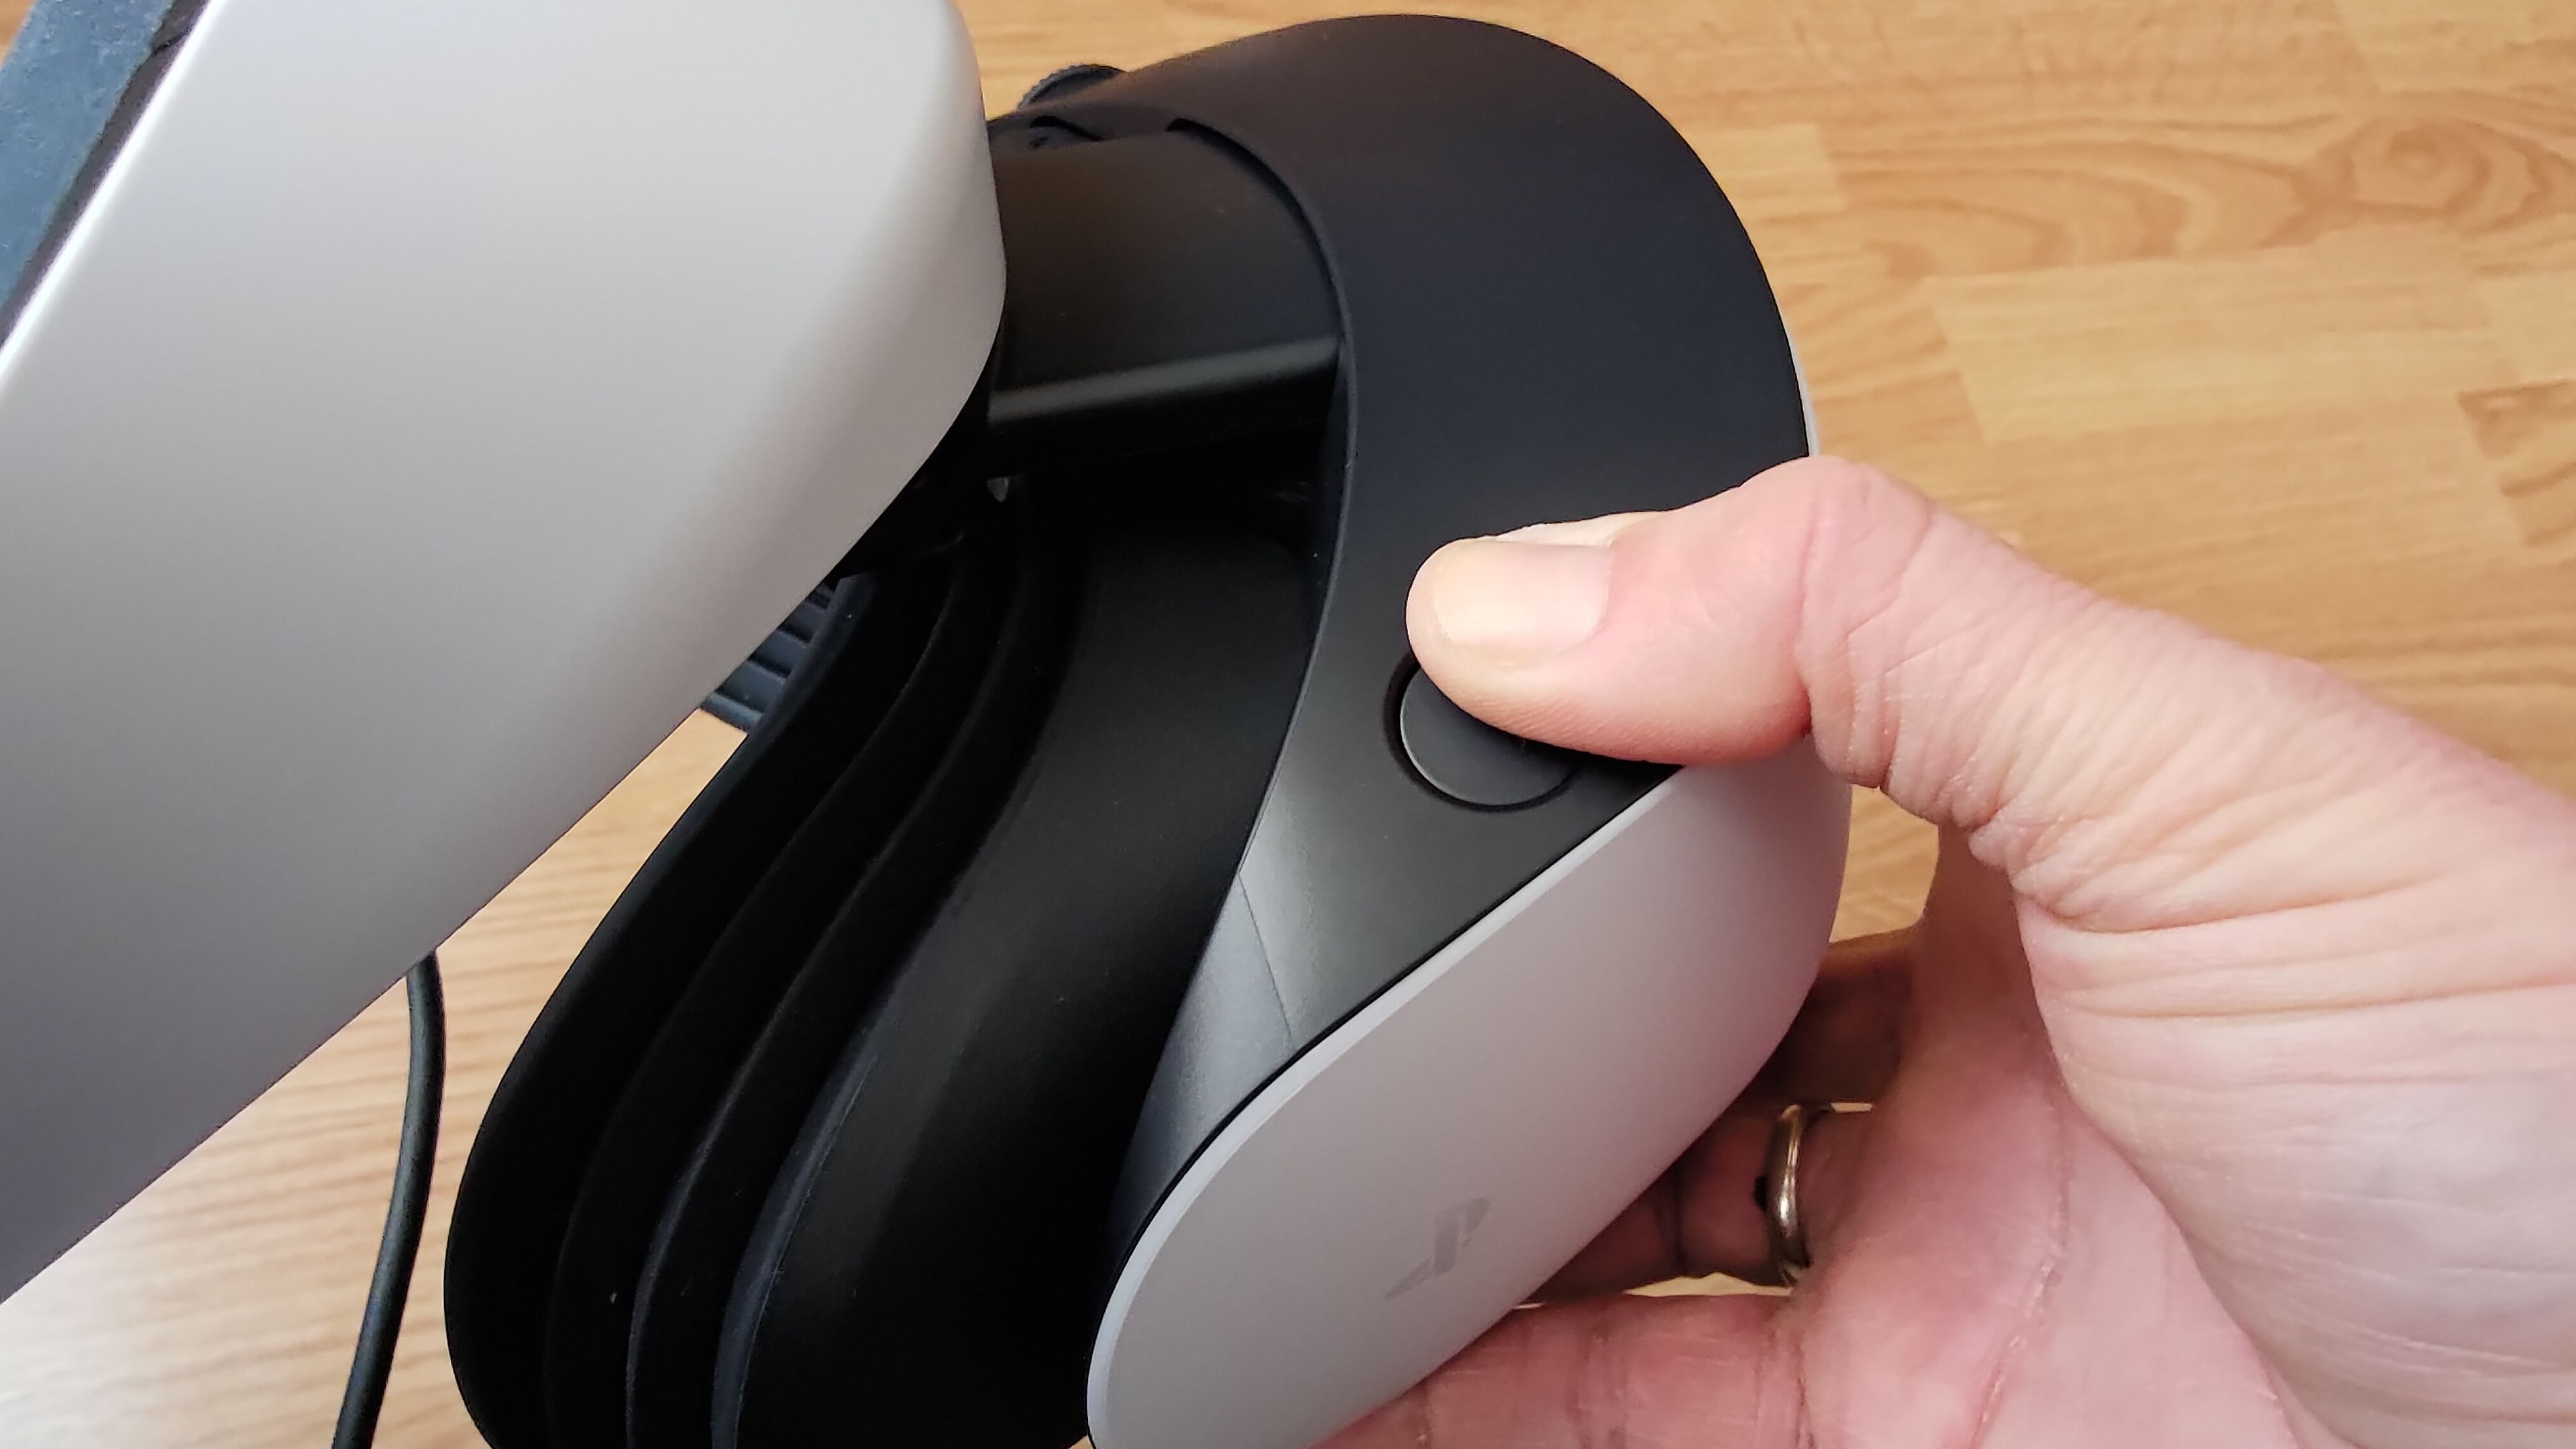 Análisis de PS VR2, el visor de realidad virtual de PS5